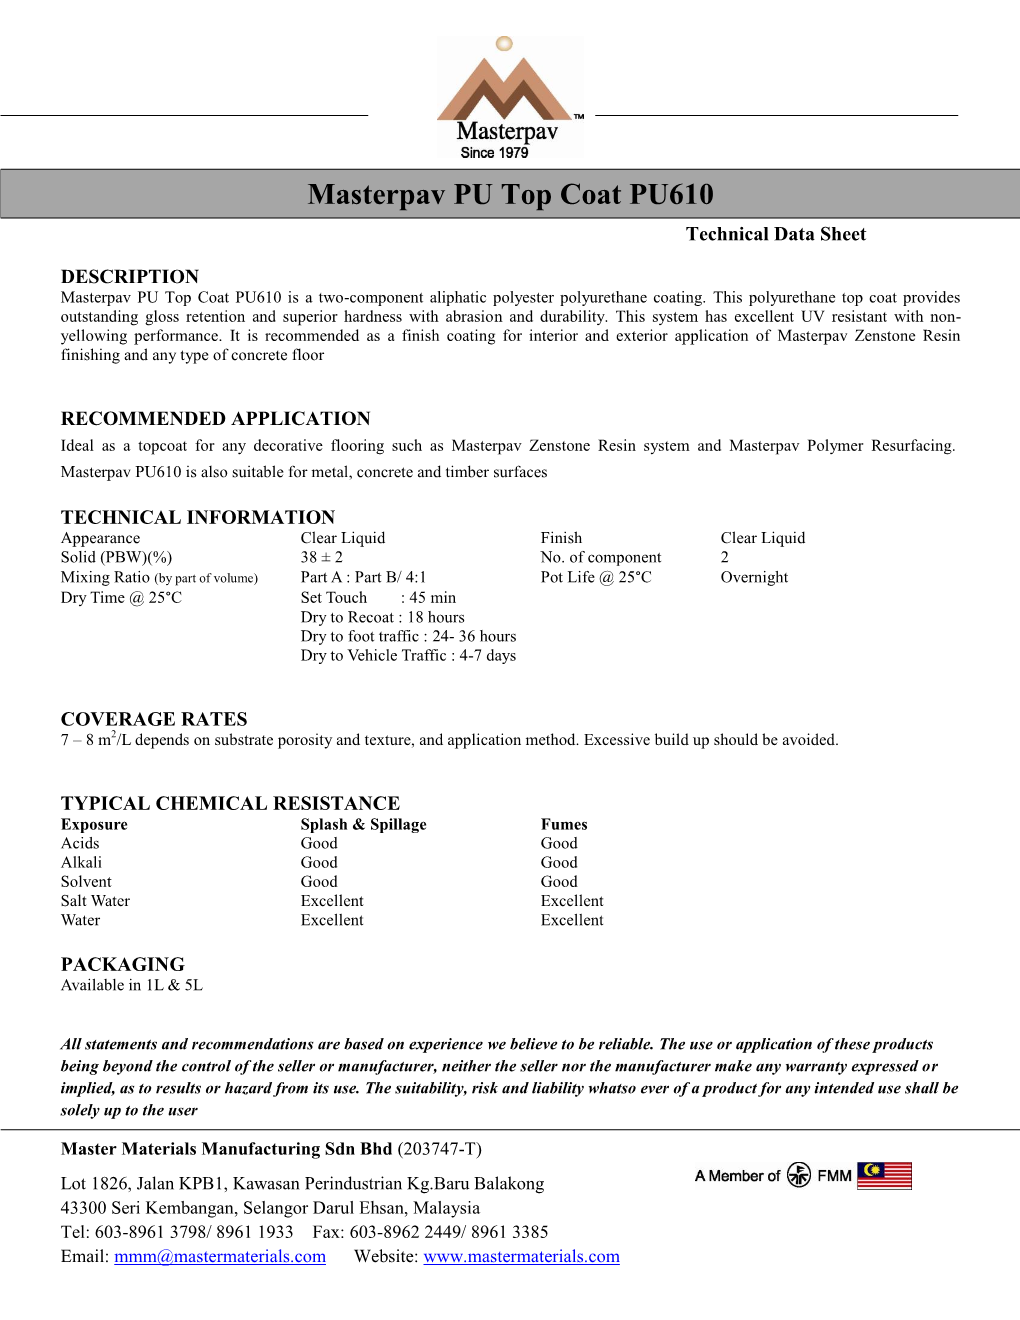 Masterpav PU Top Coat PU610 Technical Data Sheet